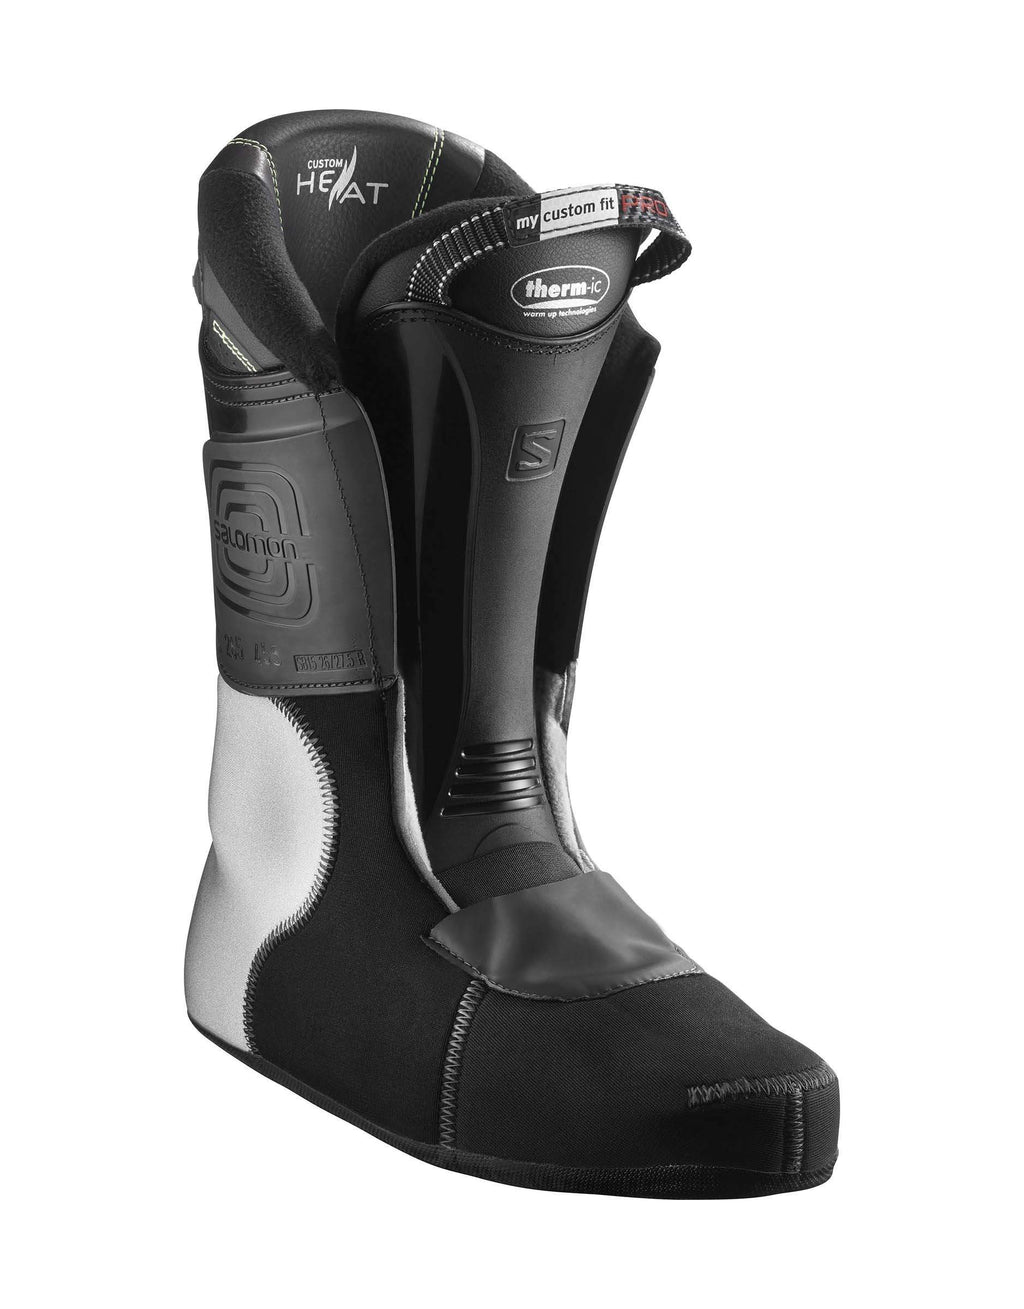 Salomon X 110 Custom Heat Boots aussieskier.com